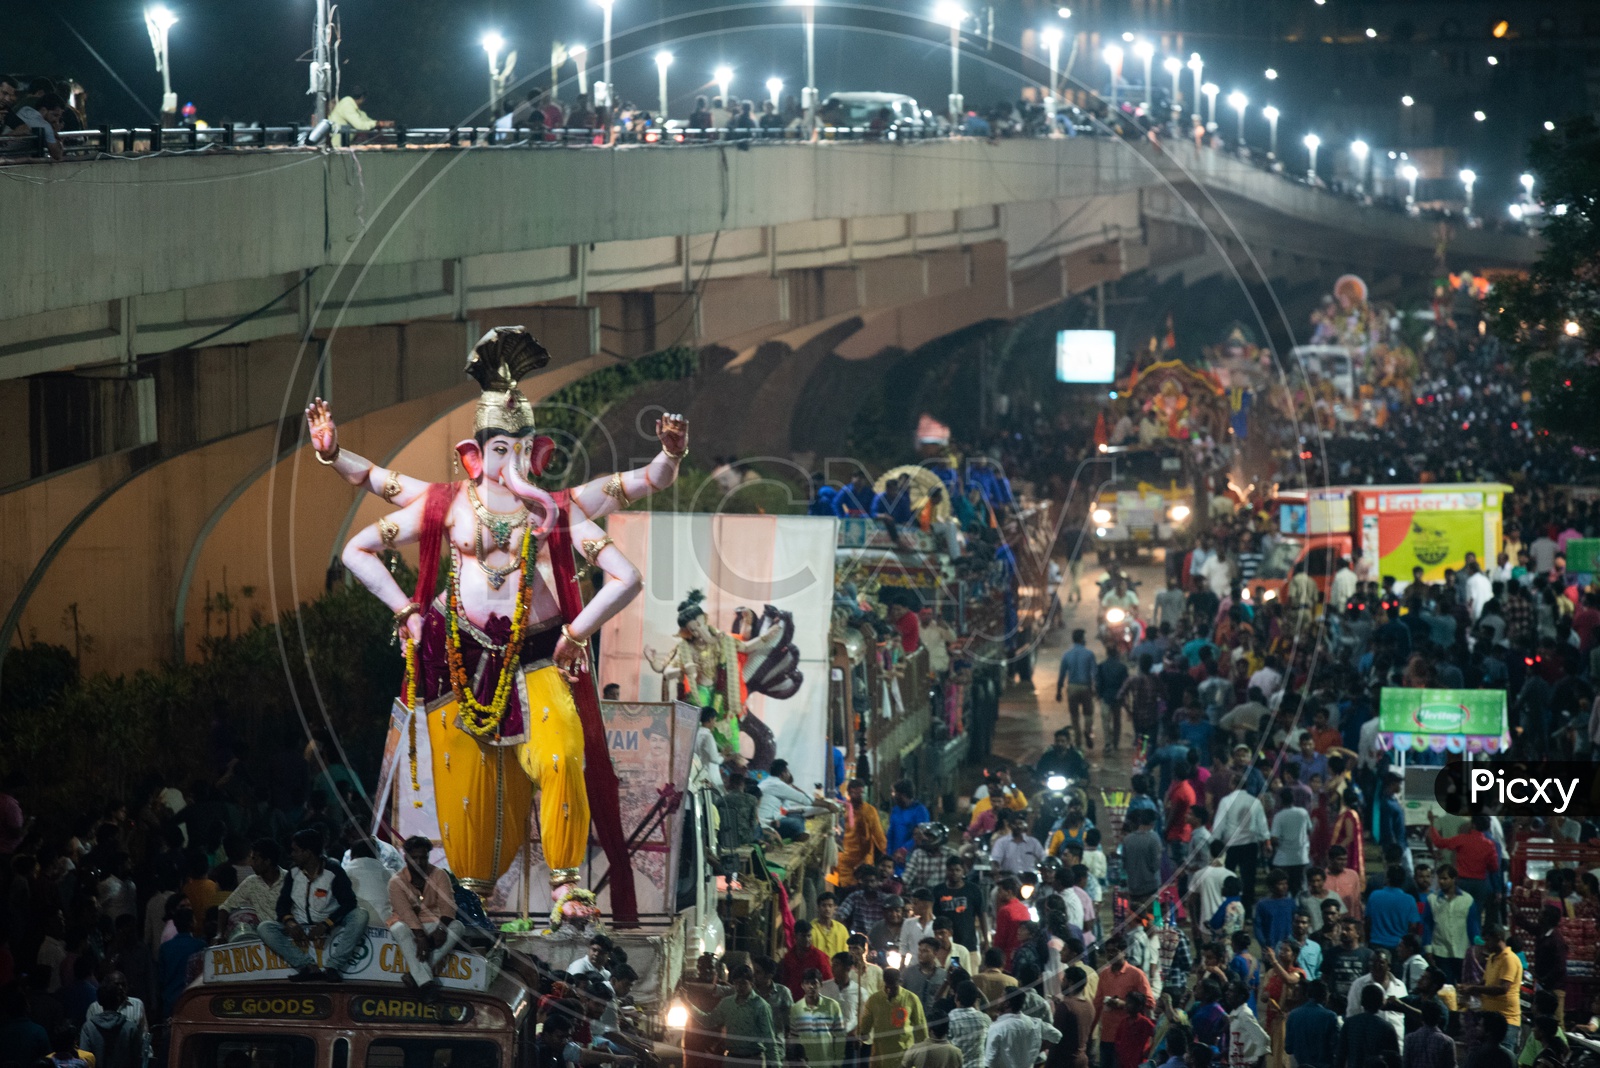 Lord Ganesh Idols in Procession At Tank Bund  Before Immersion Or Visarjan  In Hussain Sagar Lake  in Hyderabad